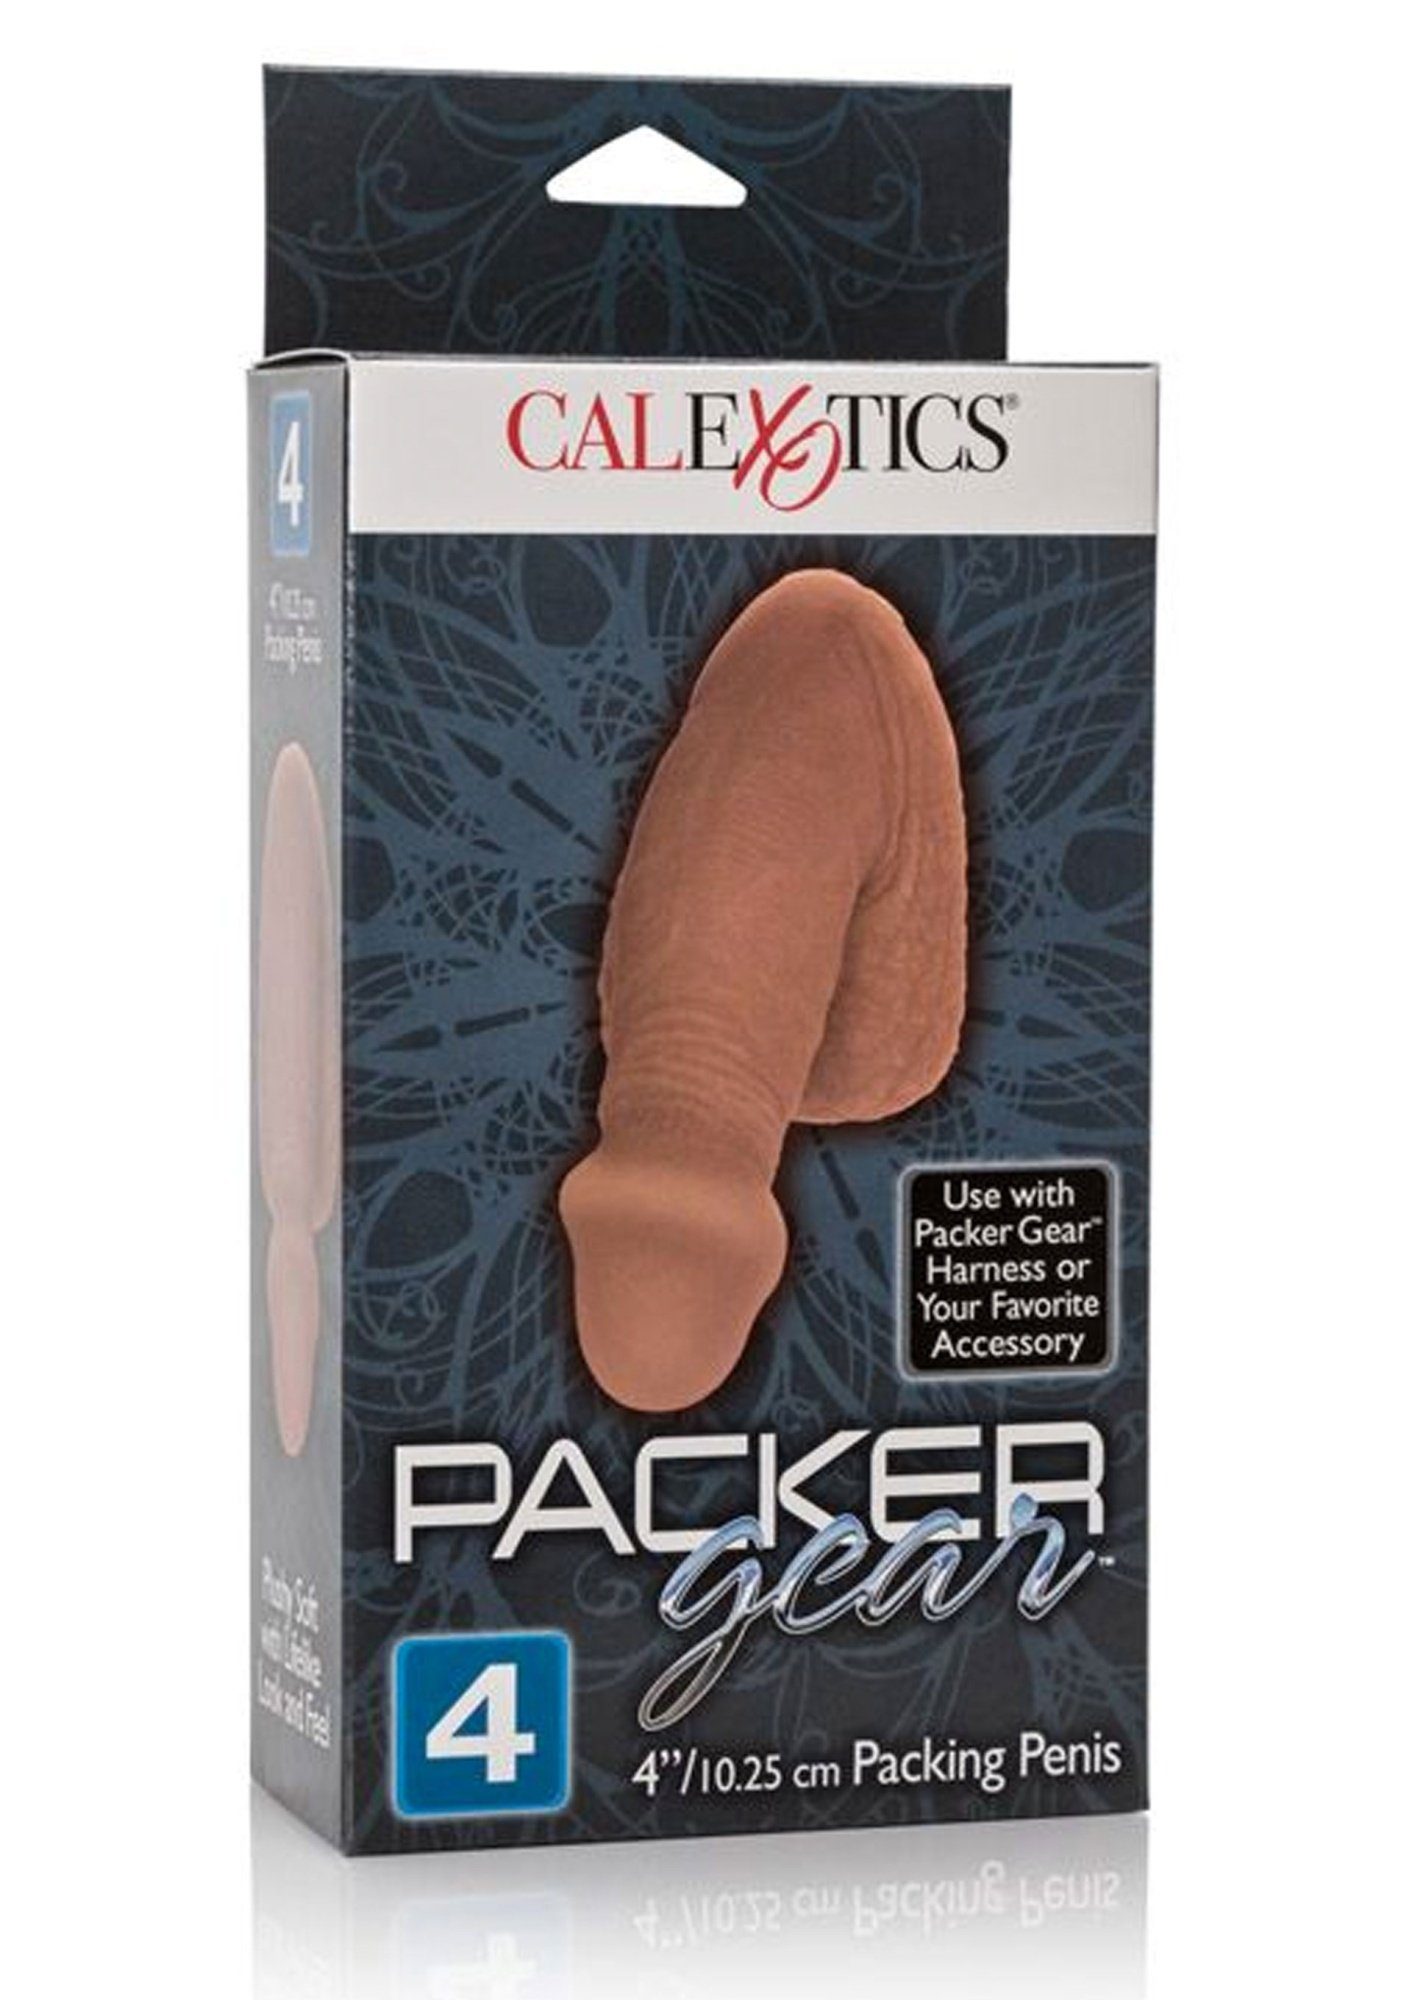 Packing braun Penis Dildo - Calexotics